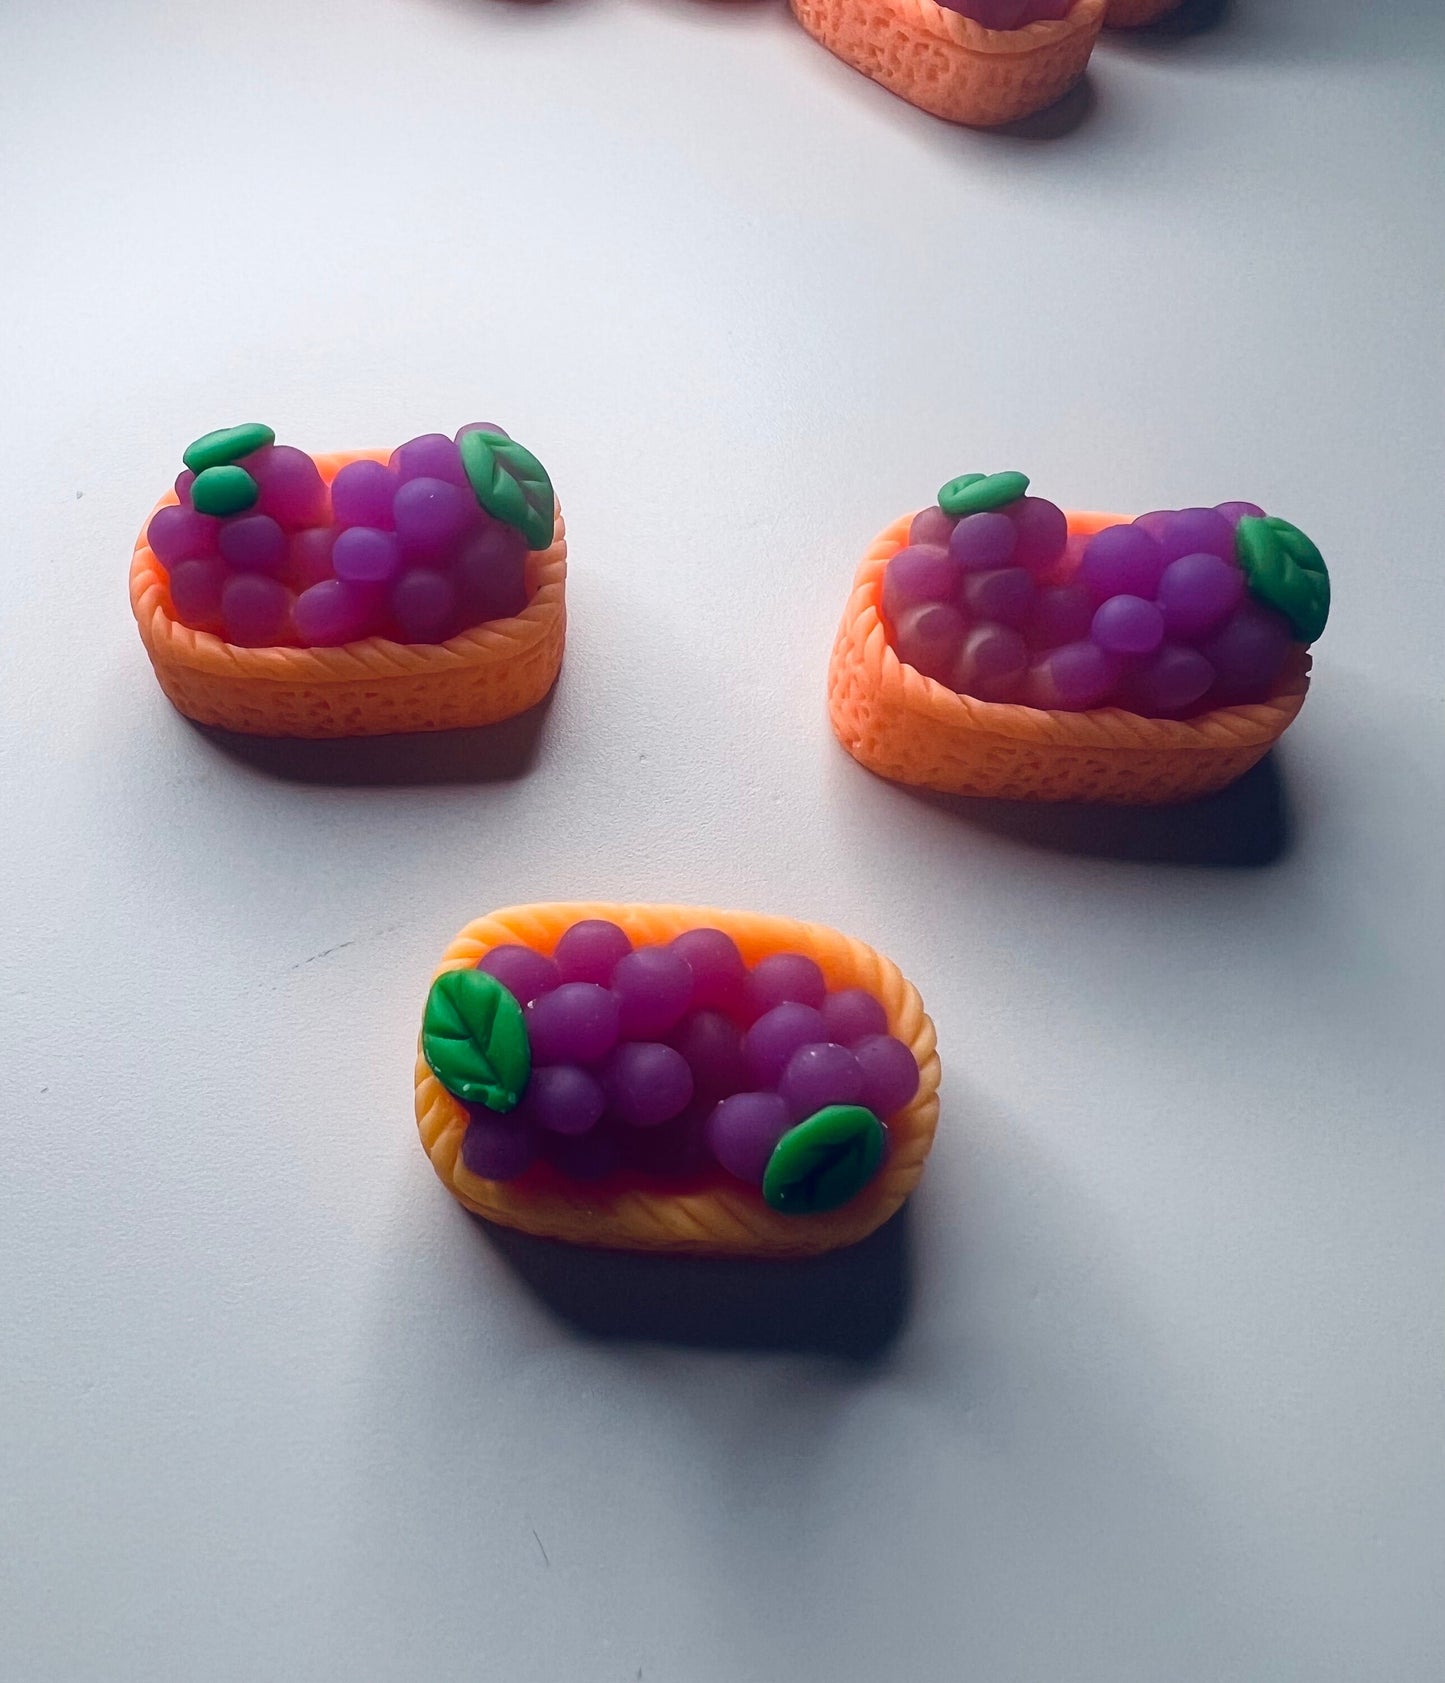 Cesta de frutas de uvas en miniatura - baratijas de frutas - mini objetos de uvas discurso Montessori - objetos en miniatura para baratijas de casa de muñecas